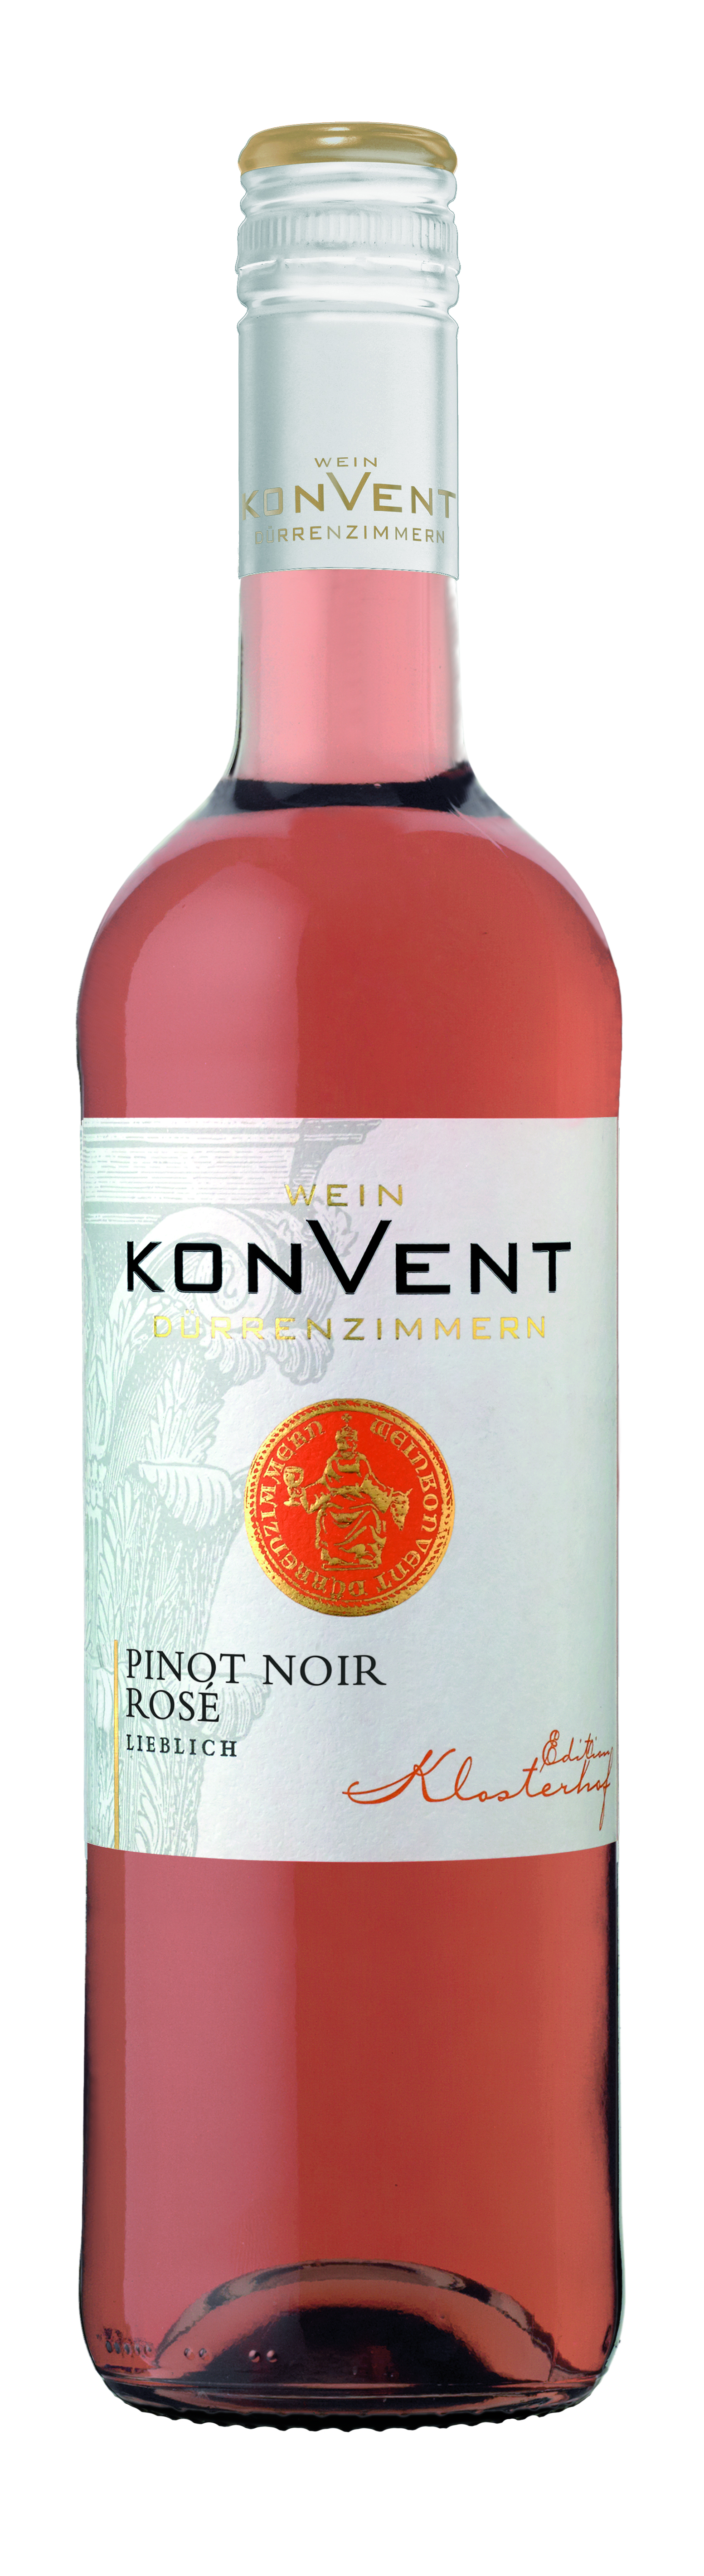 2022 Pinot Noir Rosé lieblich "Klosterhof" 0,75 L - Weinkonvent